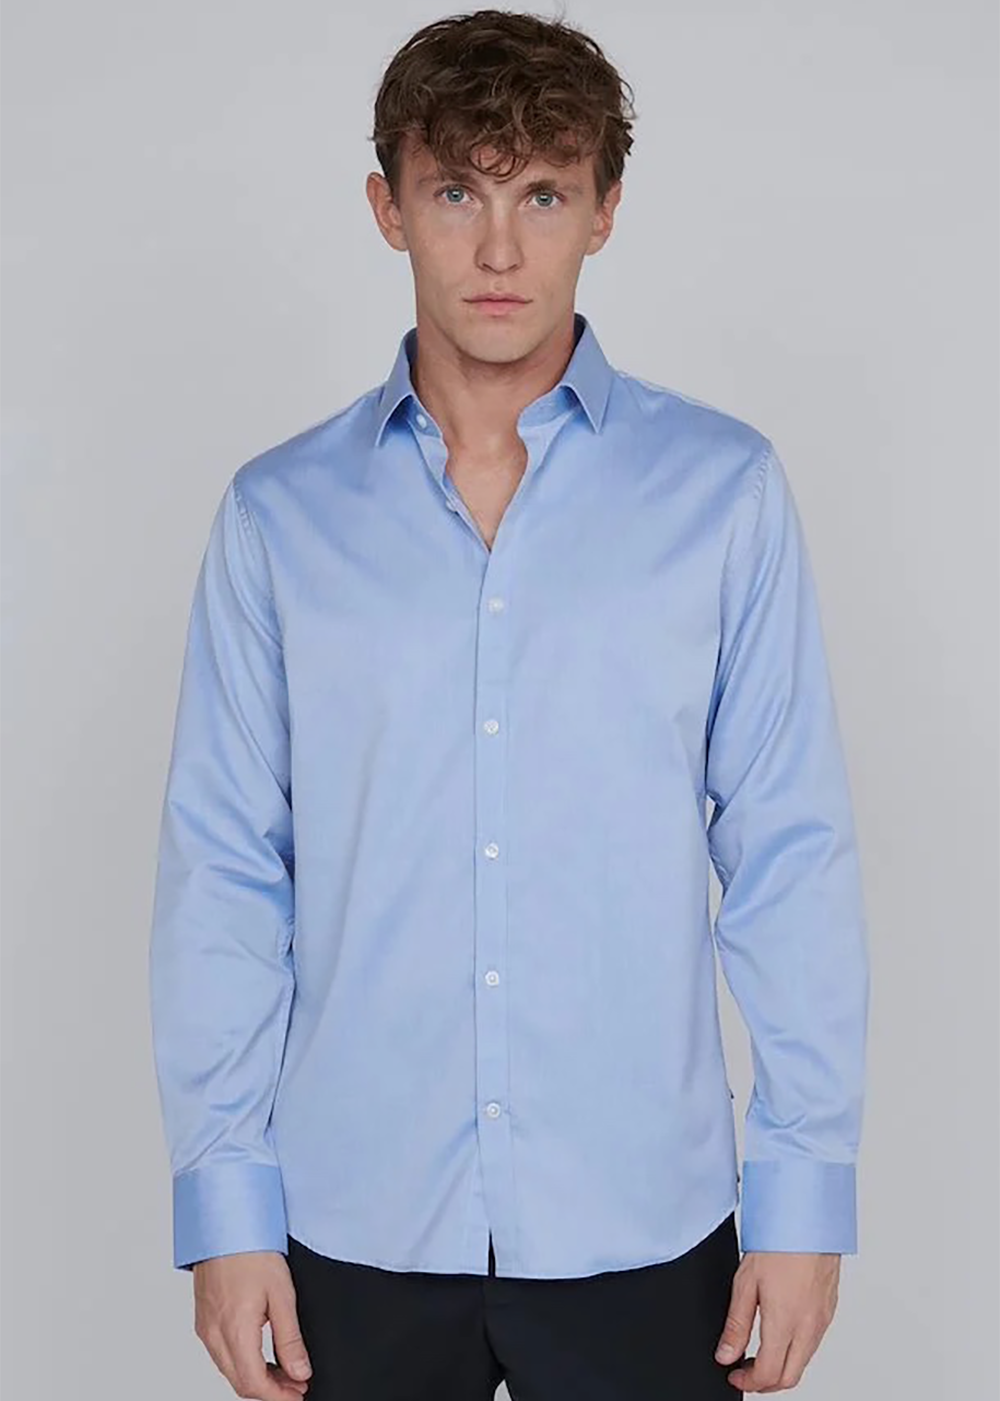 Trostol City Twill Shirt - Chambrey Blue - Matinique Canada - Danali - 38365 - 30200598